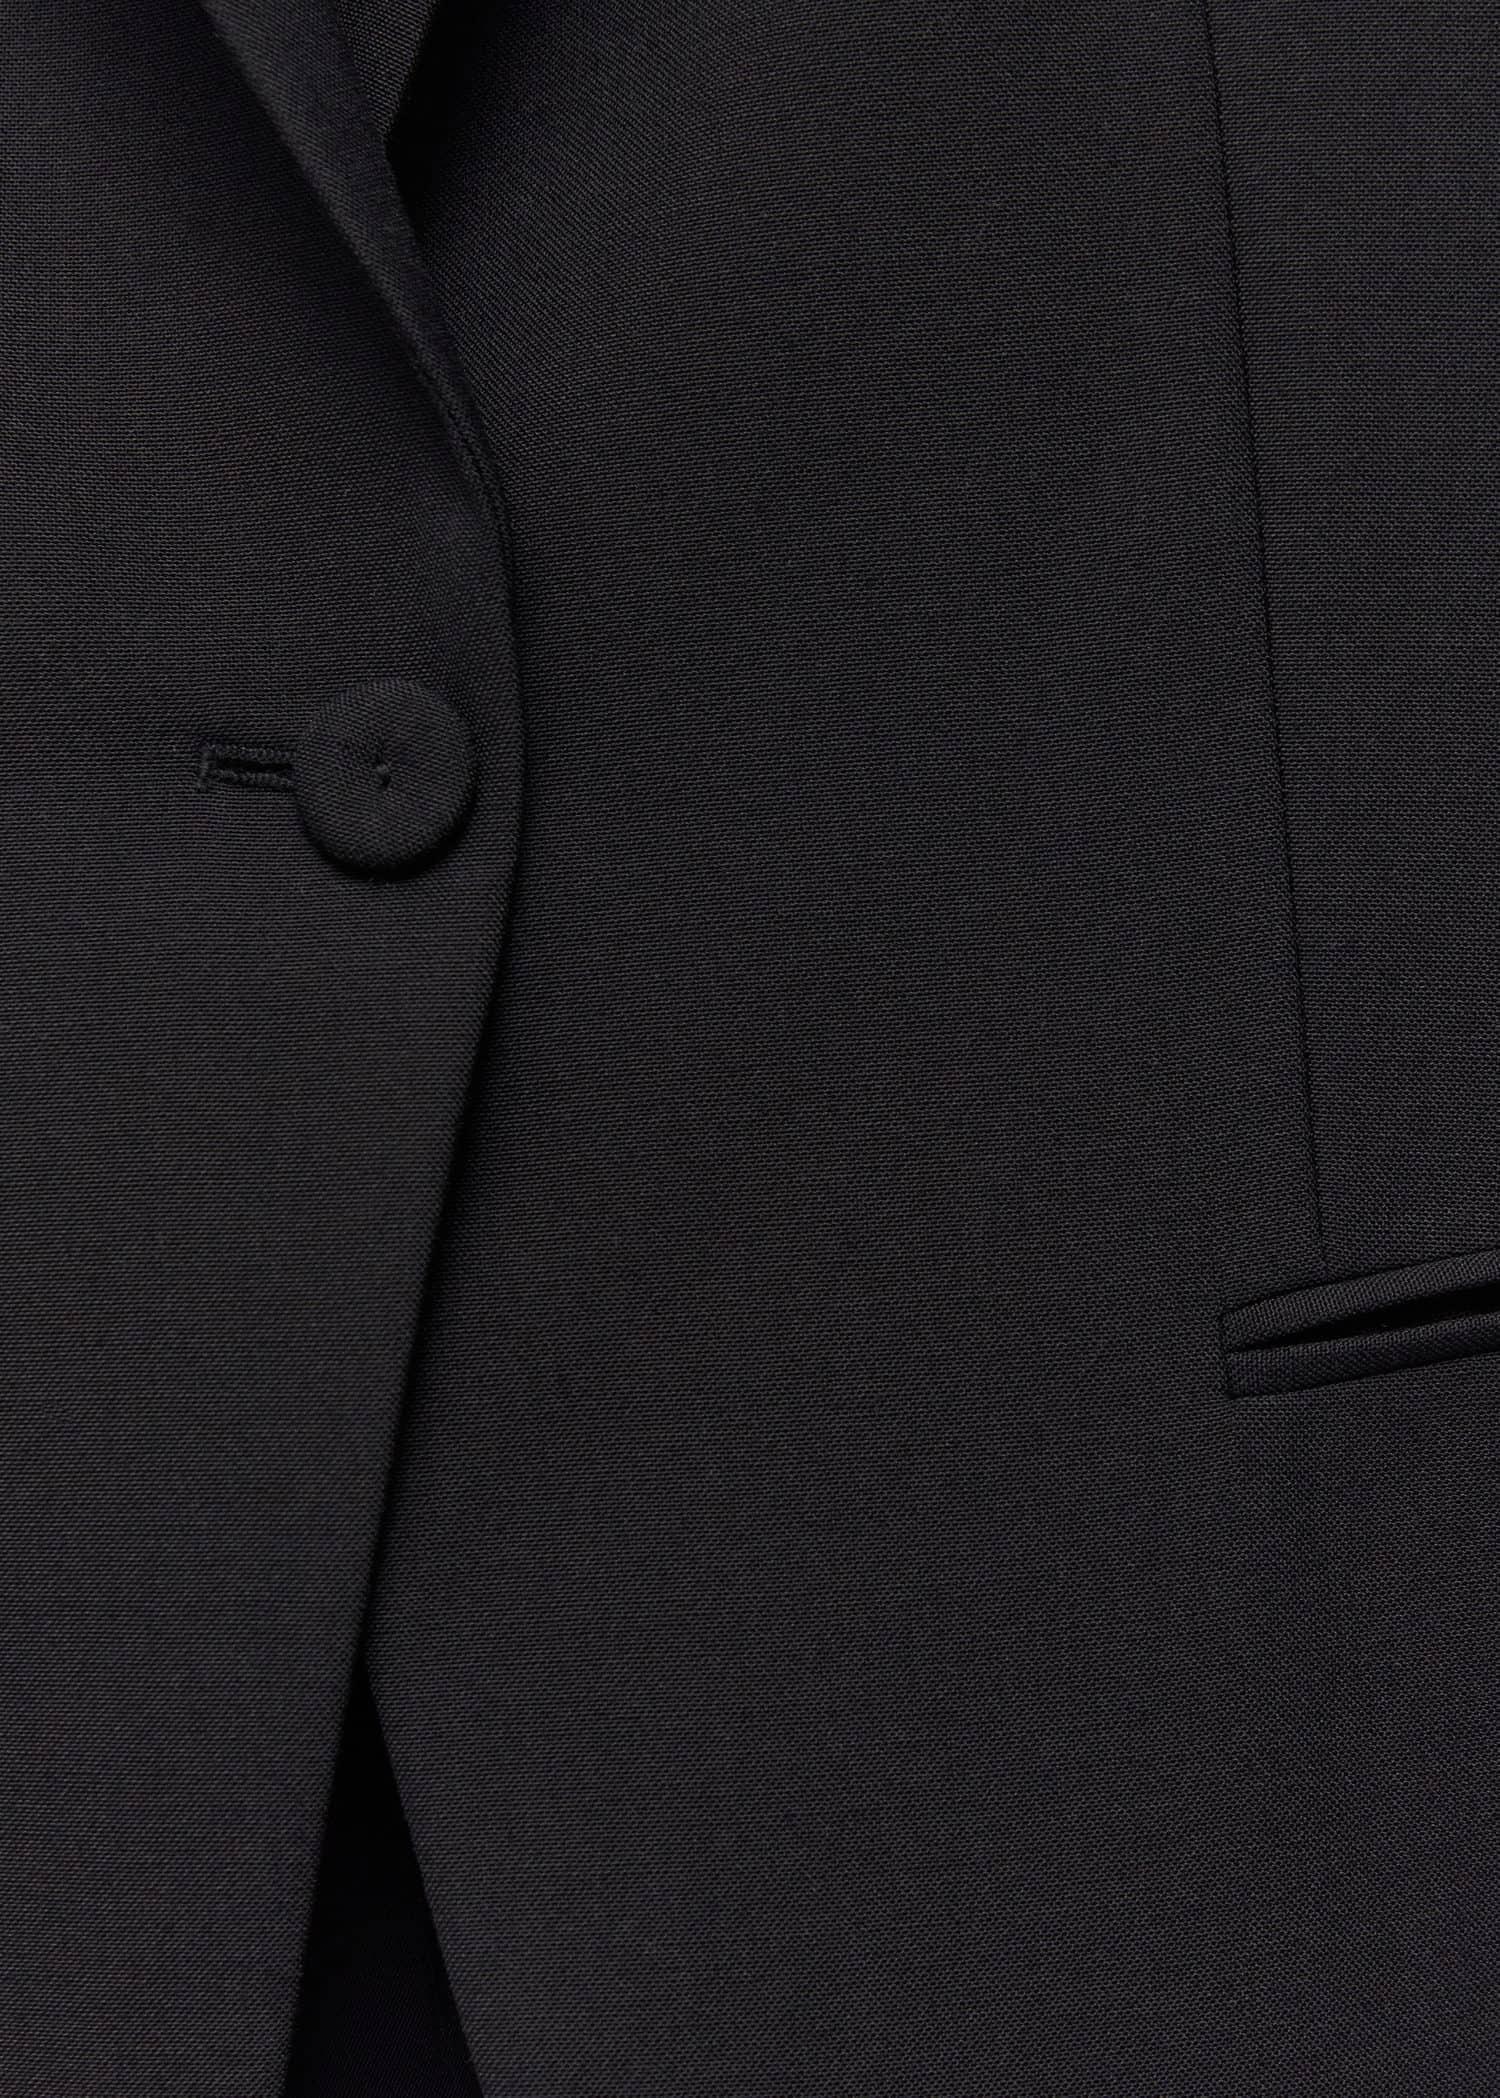 Mango - Black Wool Suit Blazer